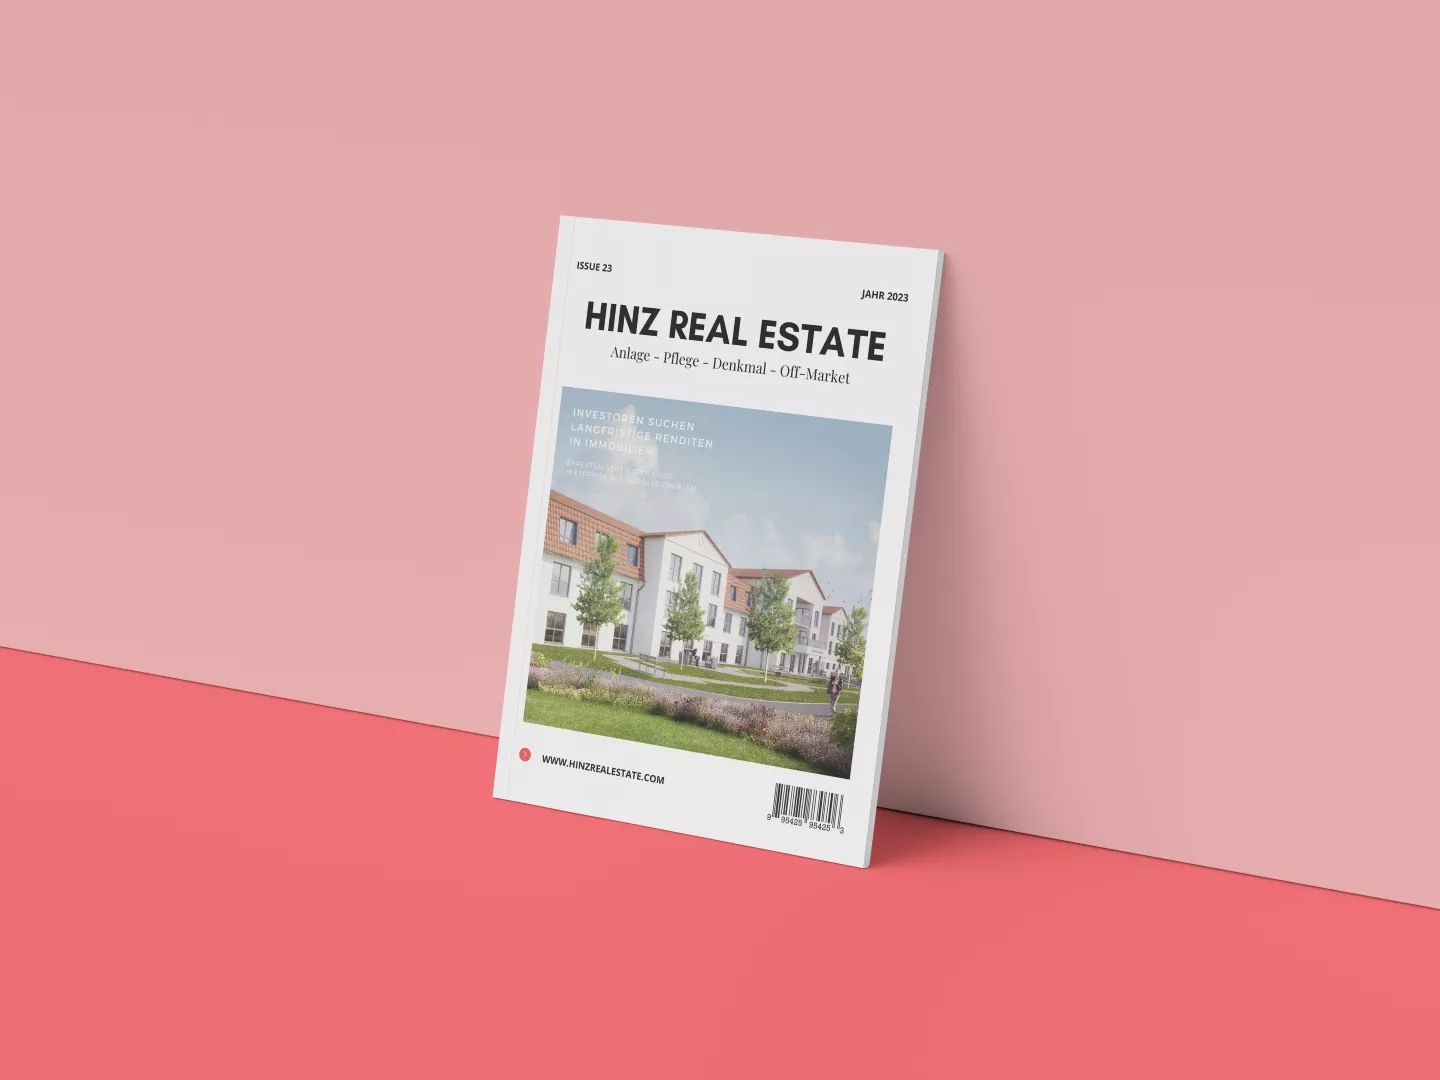 Hinz Real Estate Anlageimmobilien und Pflegeimmobilien - Immobilie finanzieren